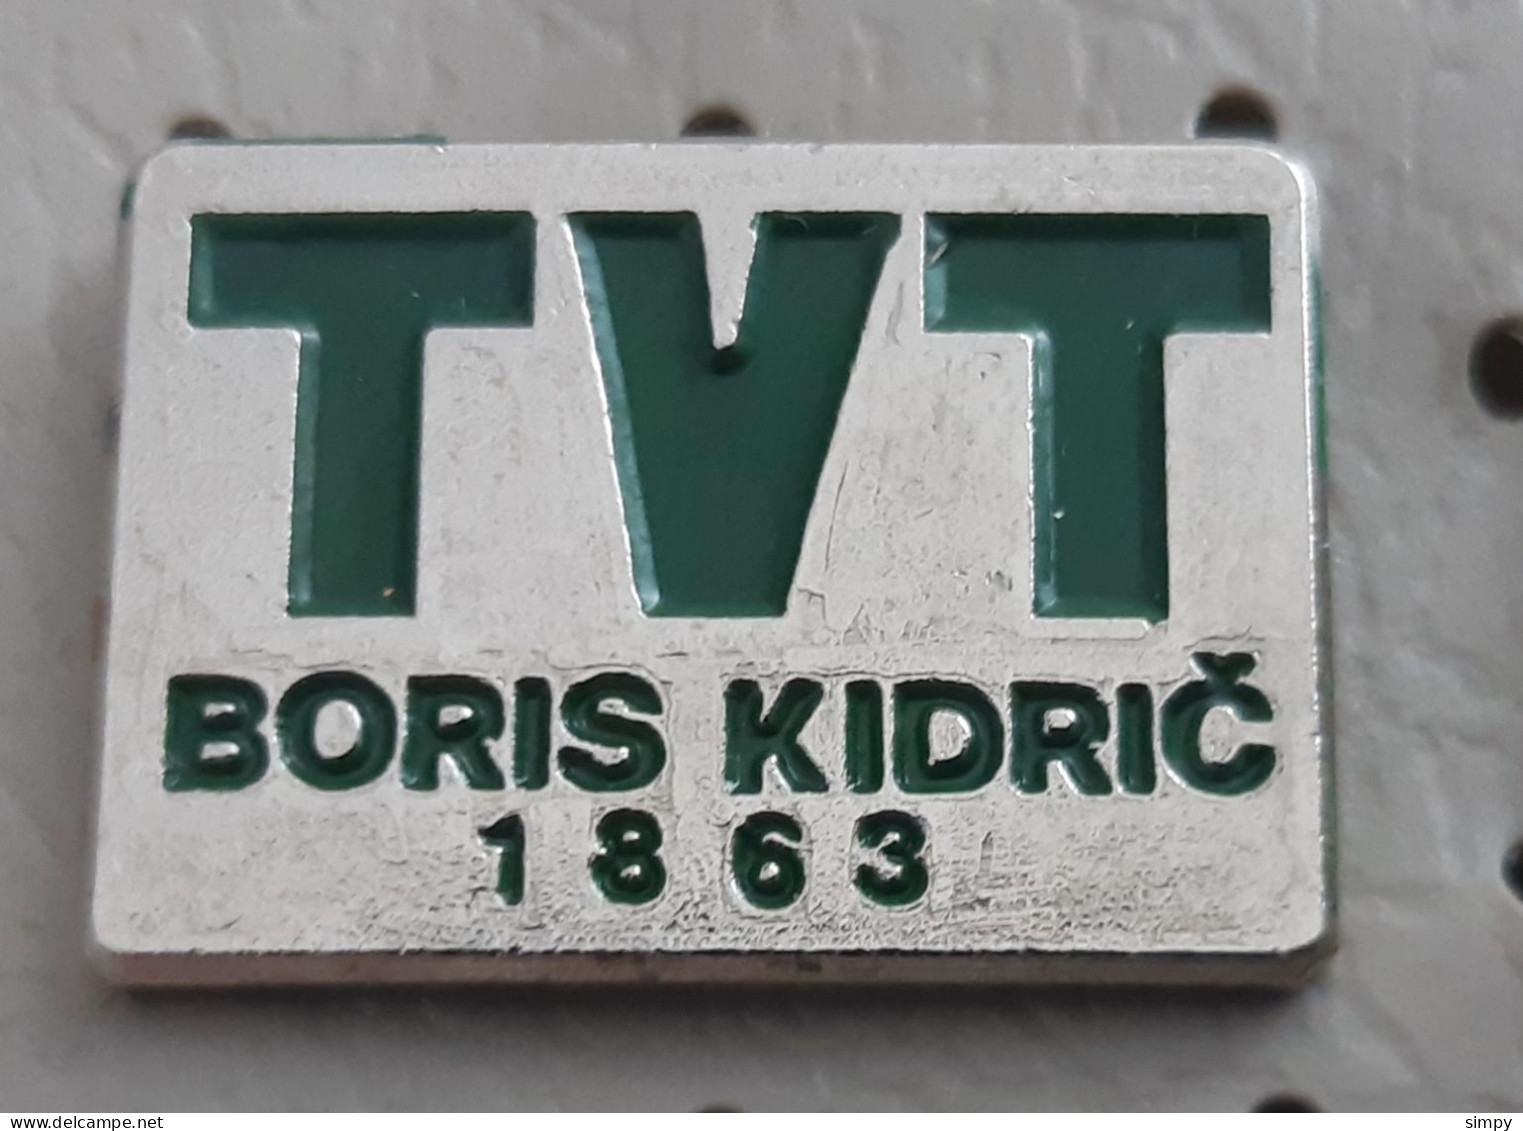 TVT Boris Kidric Maribor 1863 Locomotive Train Industry Slovenia Ex Yugoslavia Pin - Transportes